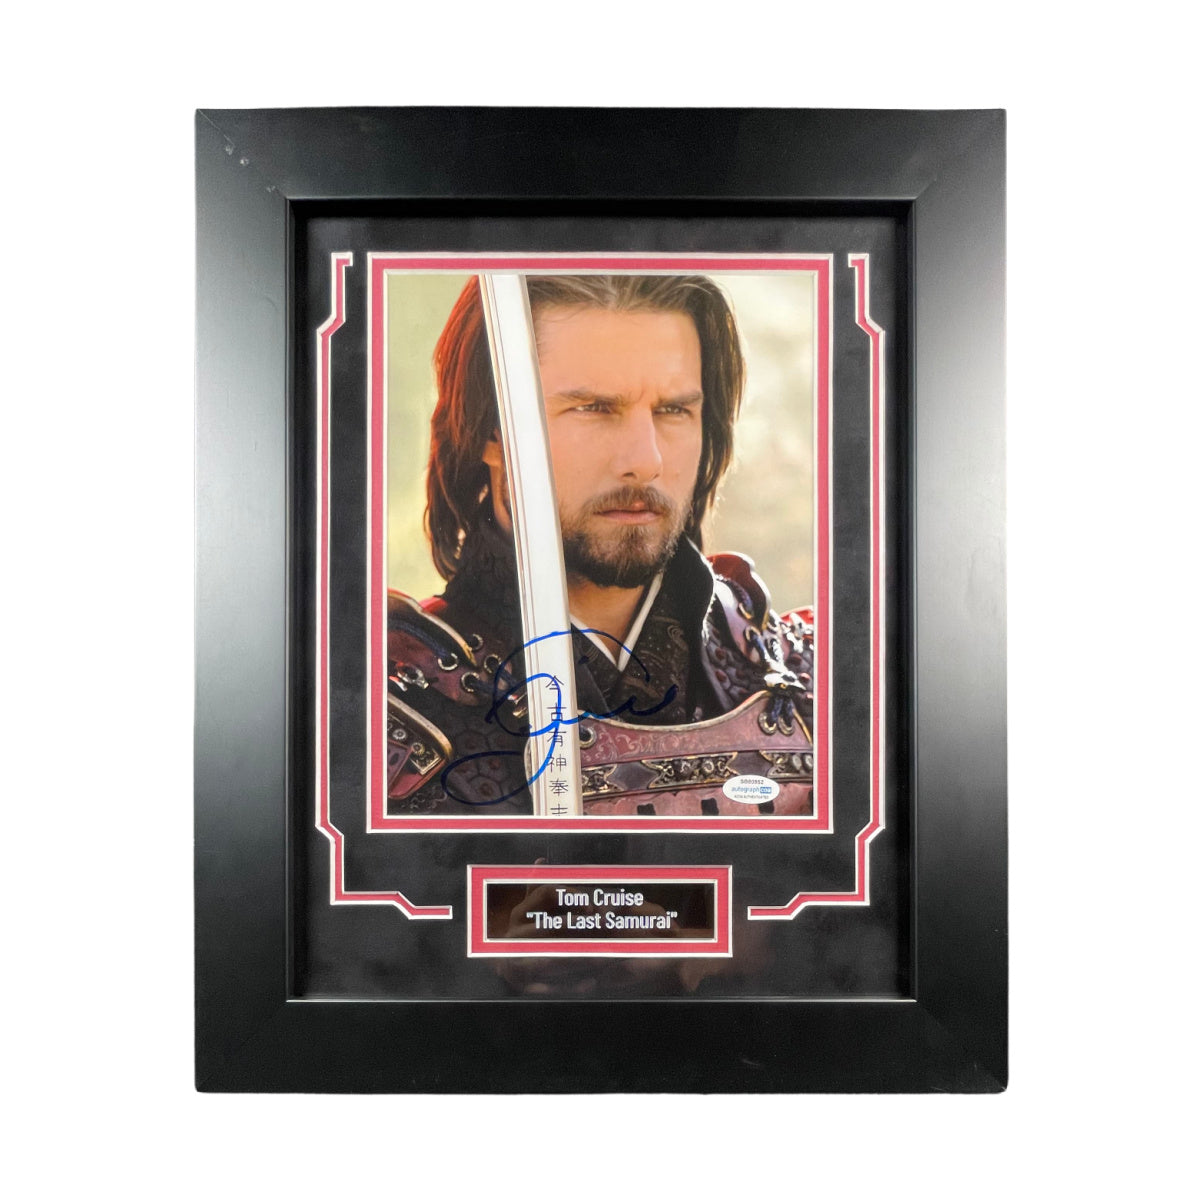 Tom Cruise Signed 8x10 Framed Photo The Last Samurai Autographed Authentic ACOA